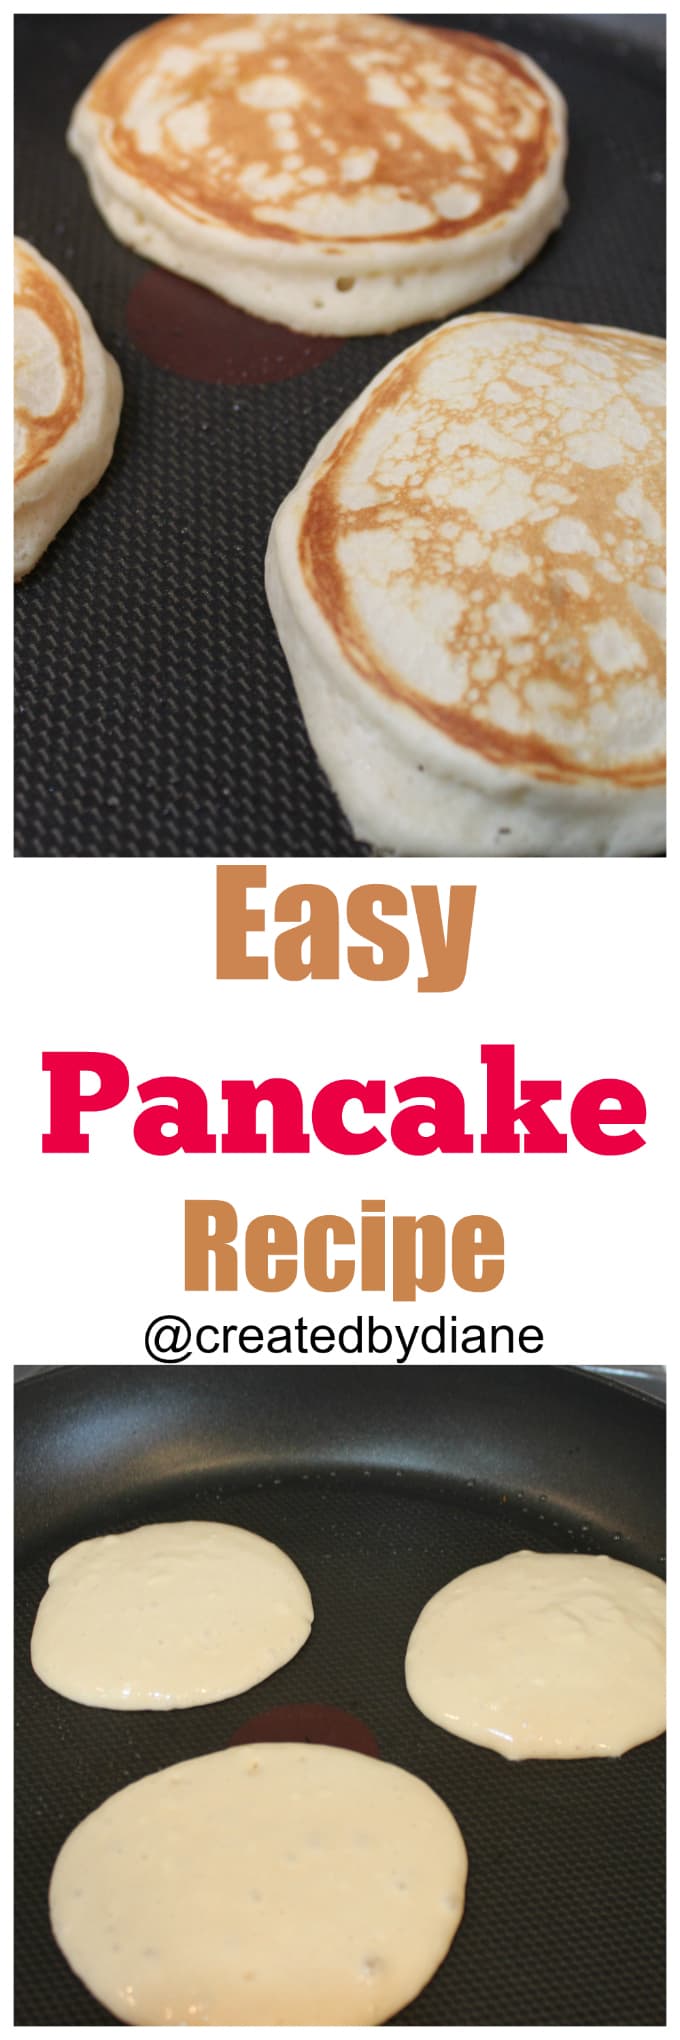 easy-pancake-recipe-createdbydiane